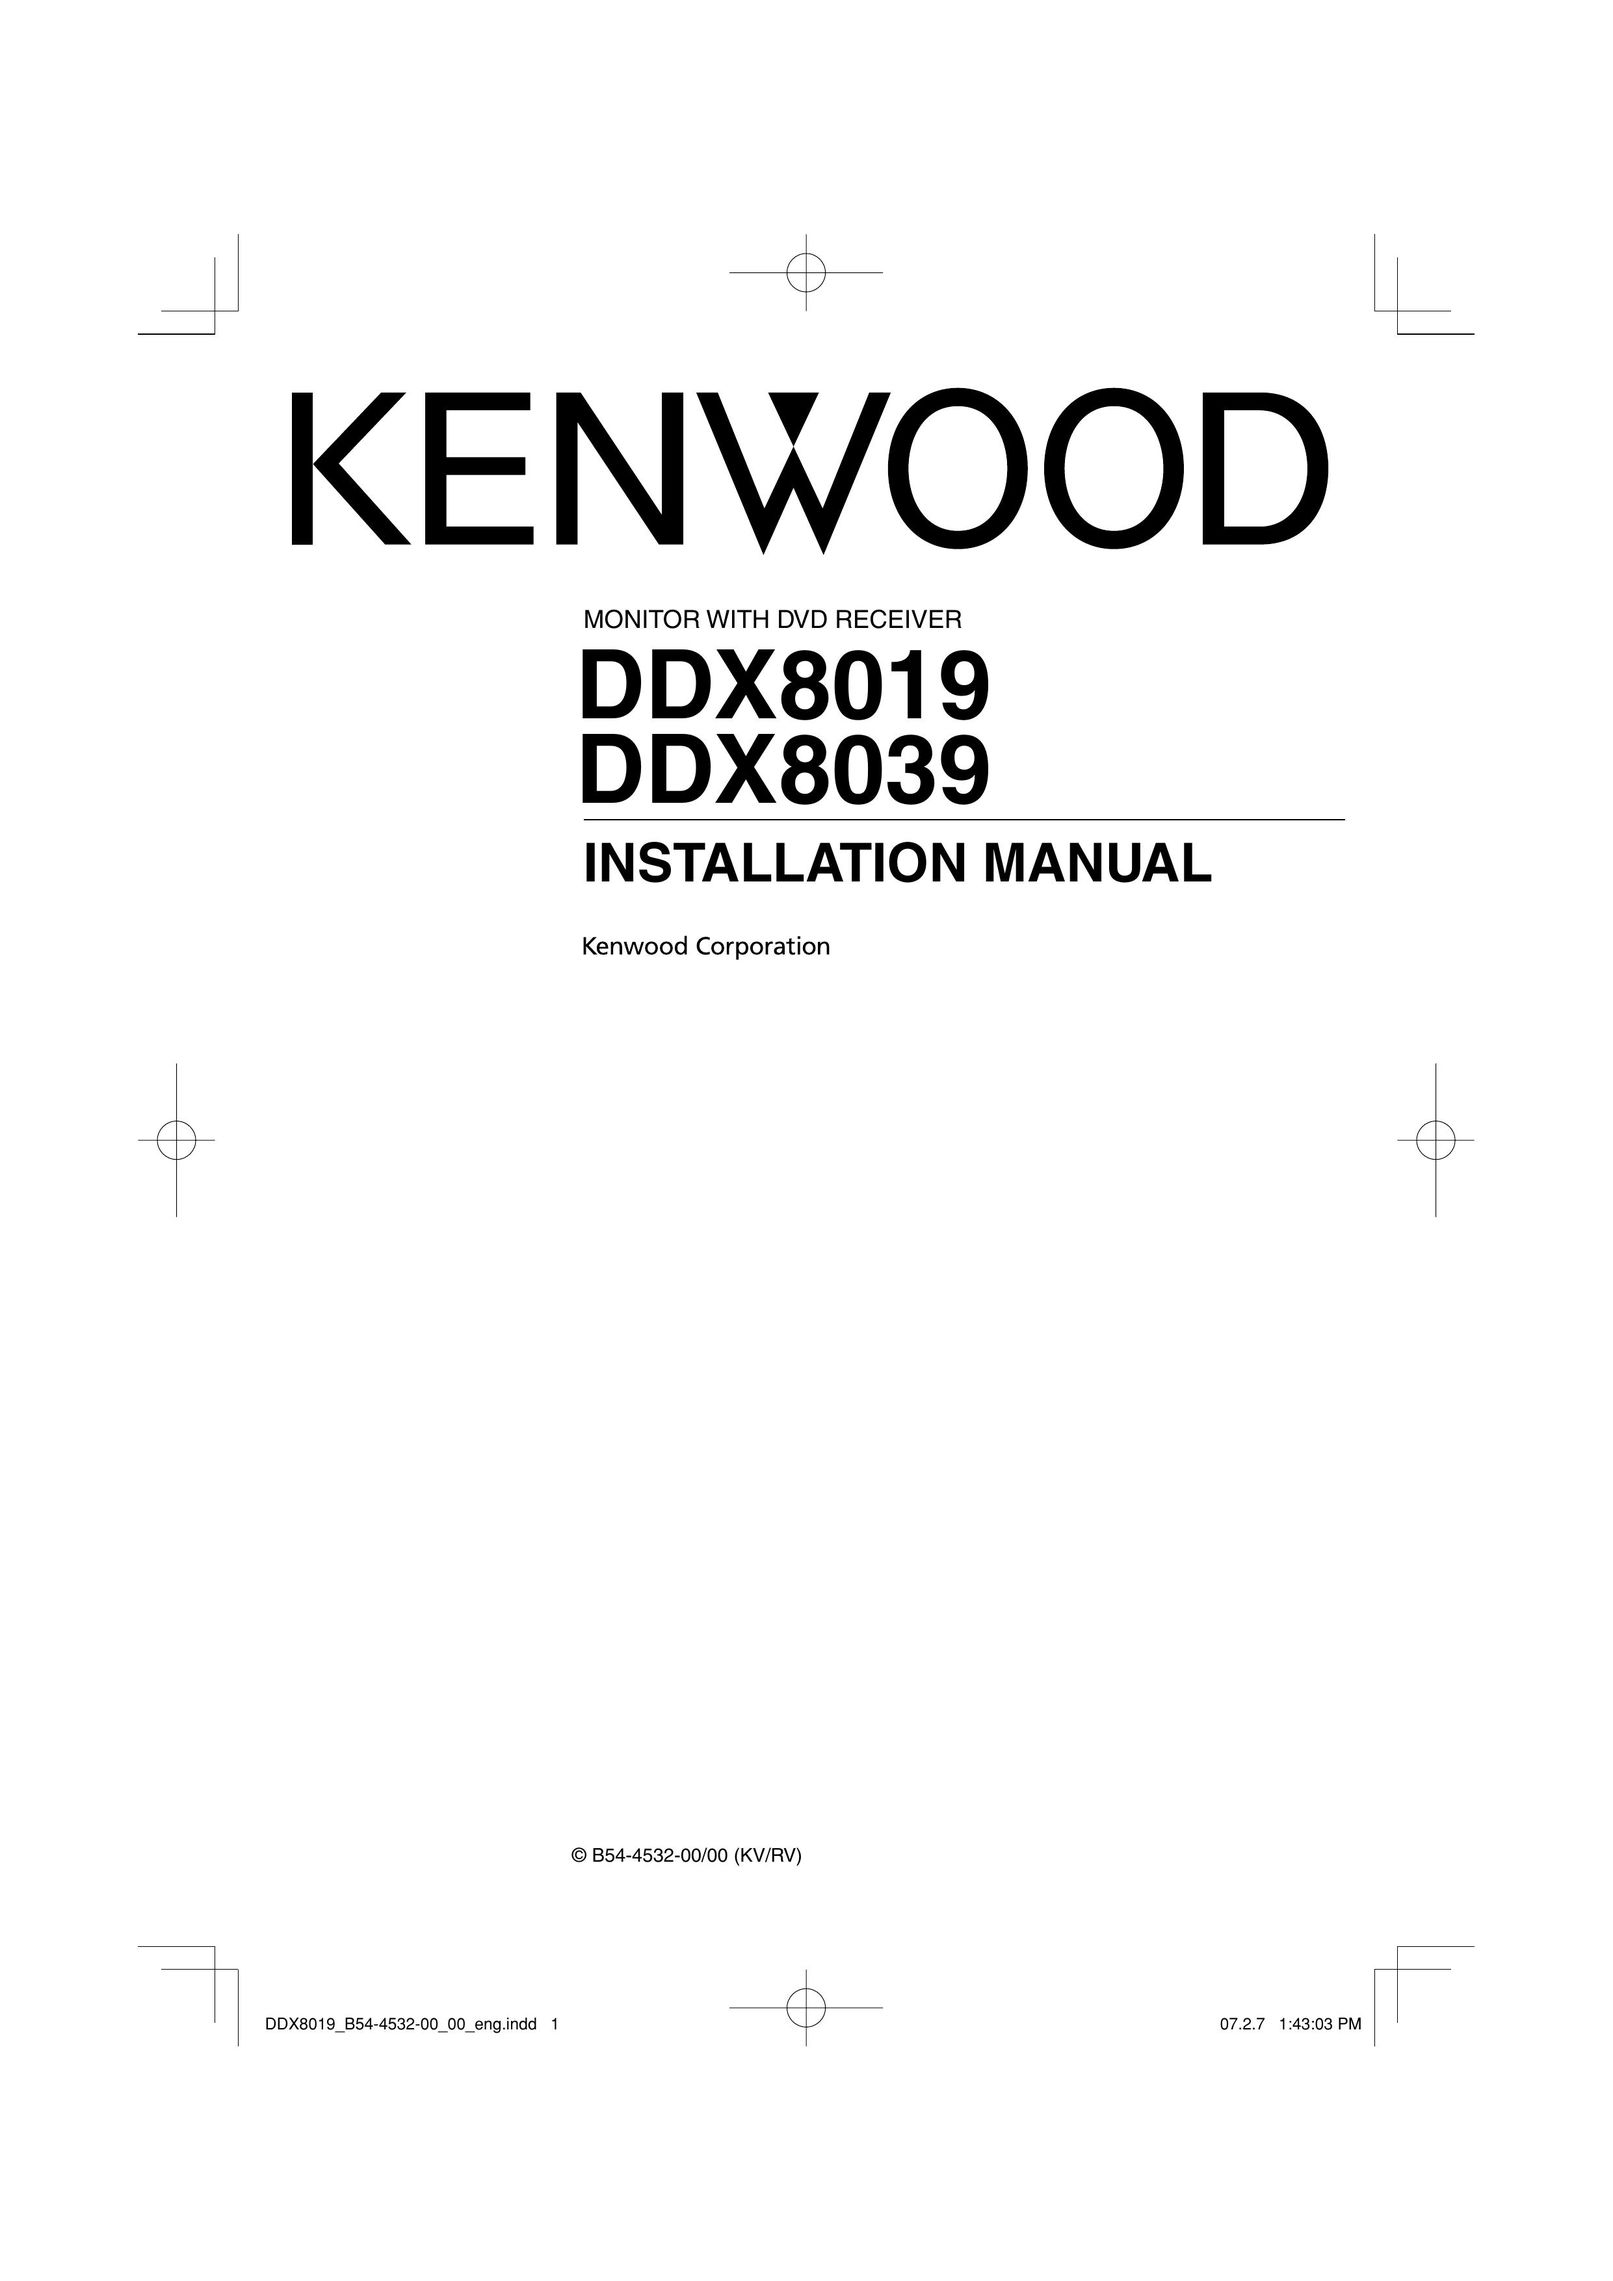 Kenwood DDX8039 Computer Monitor User Manual